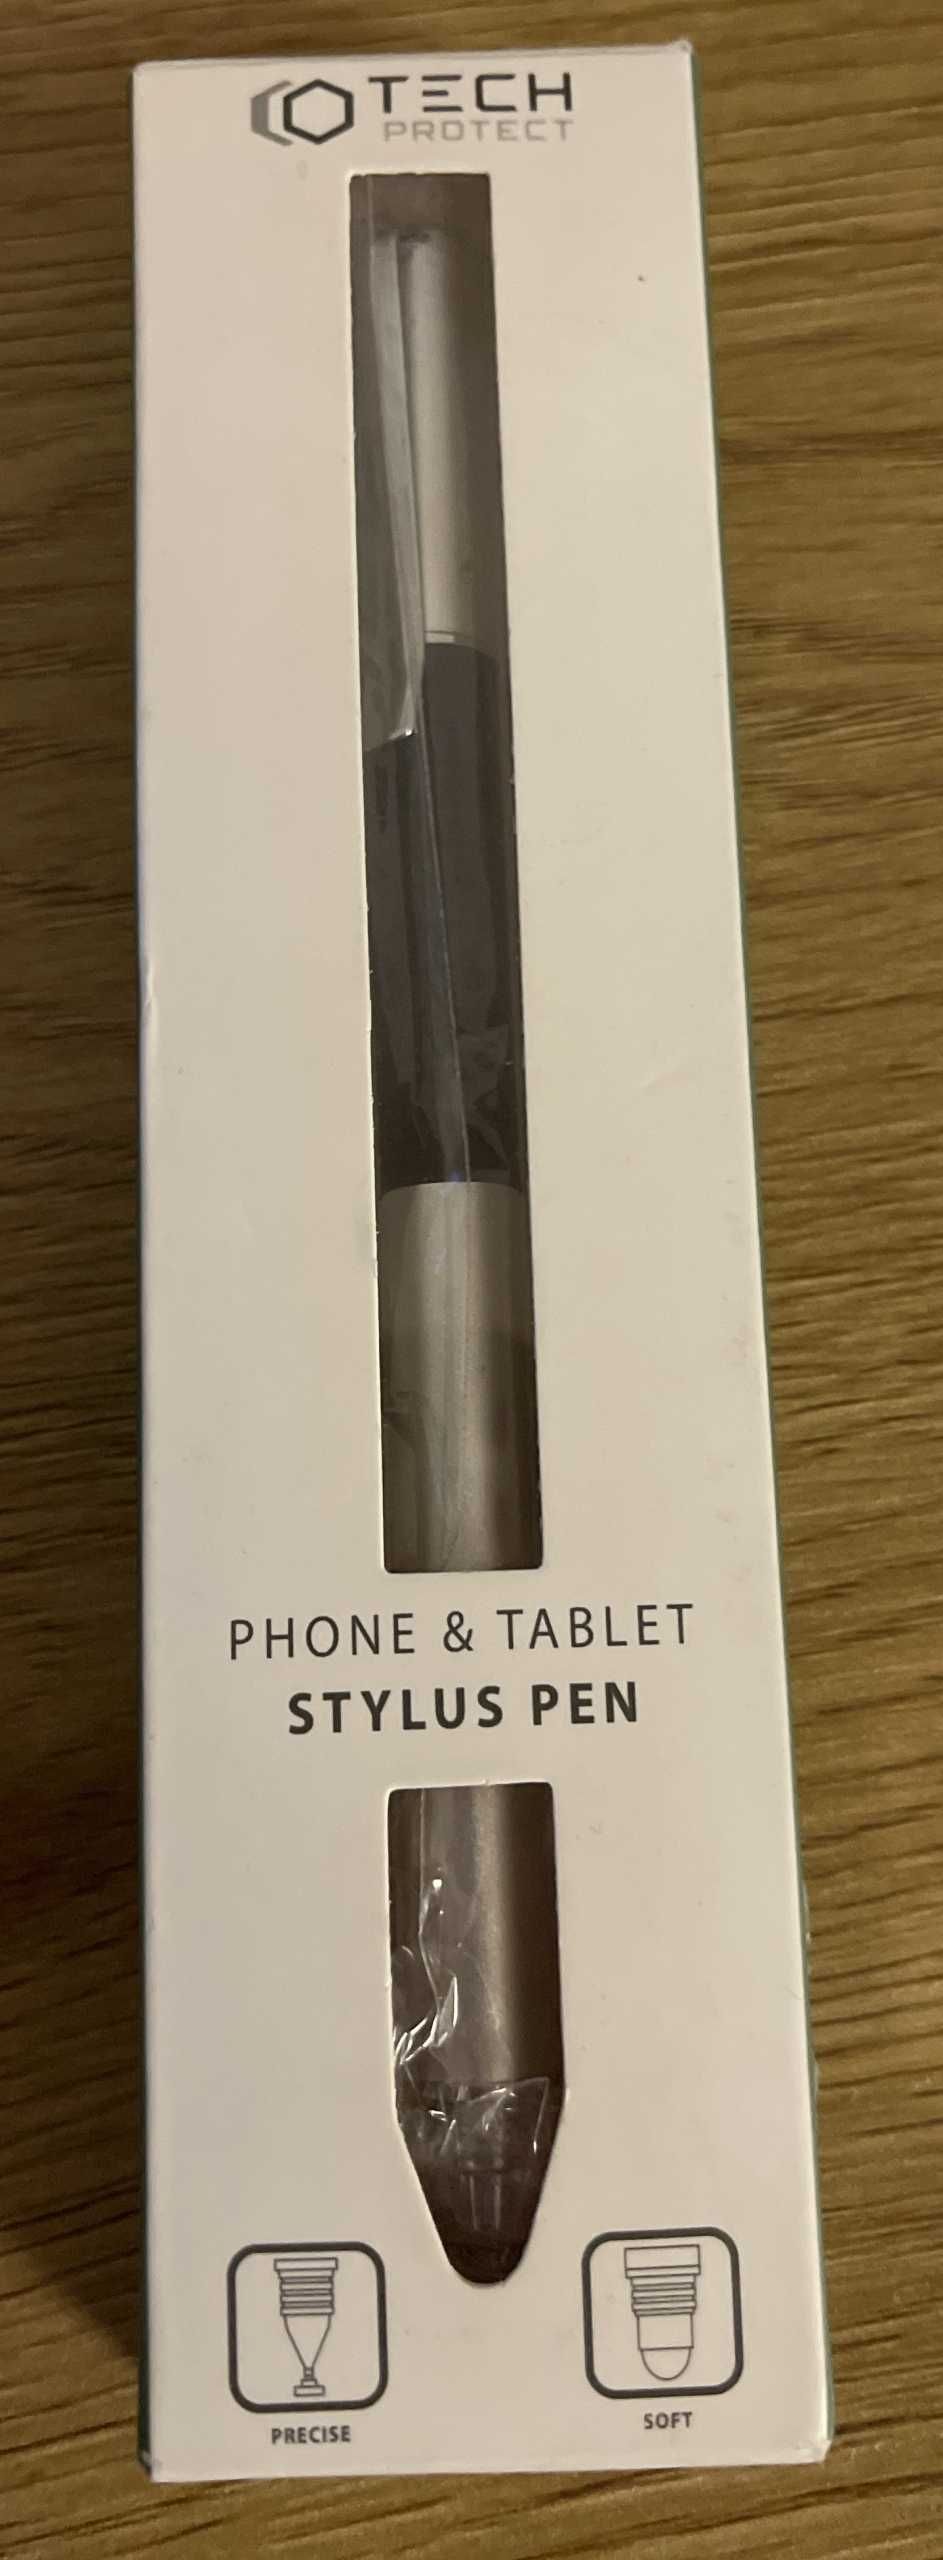 Rysik TECH-PROTECT Stylus Pen Seebrny